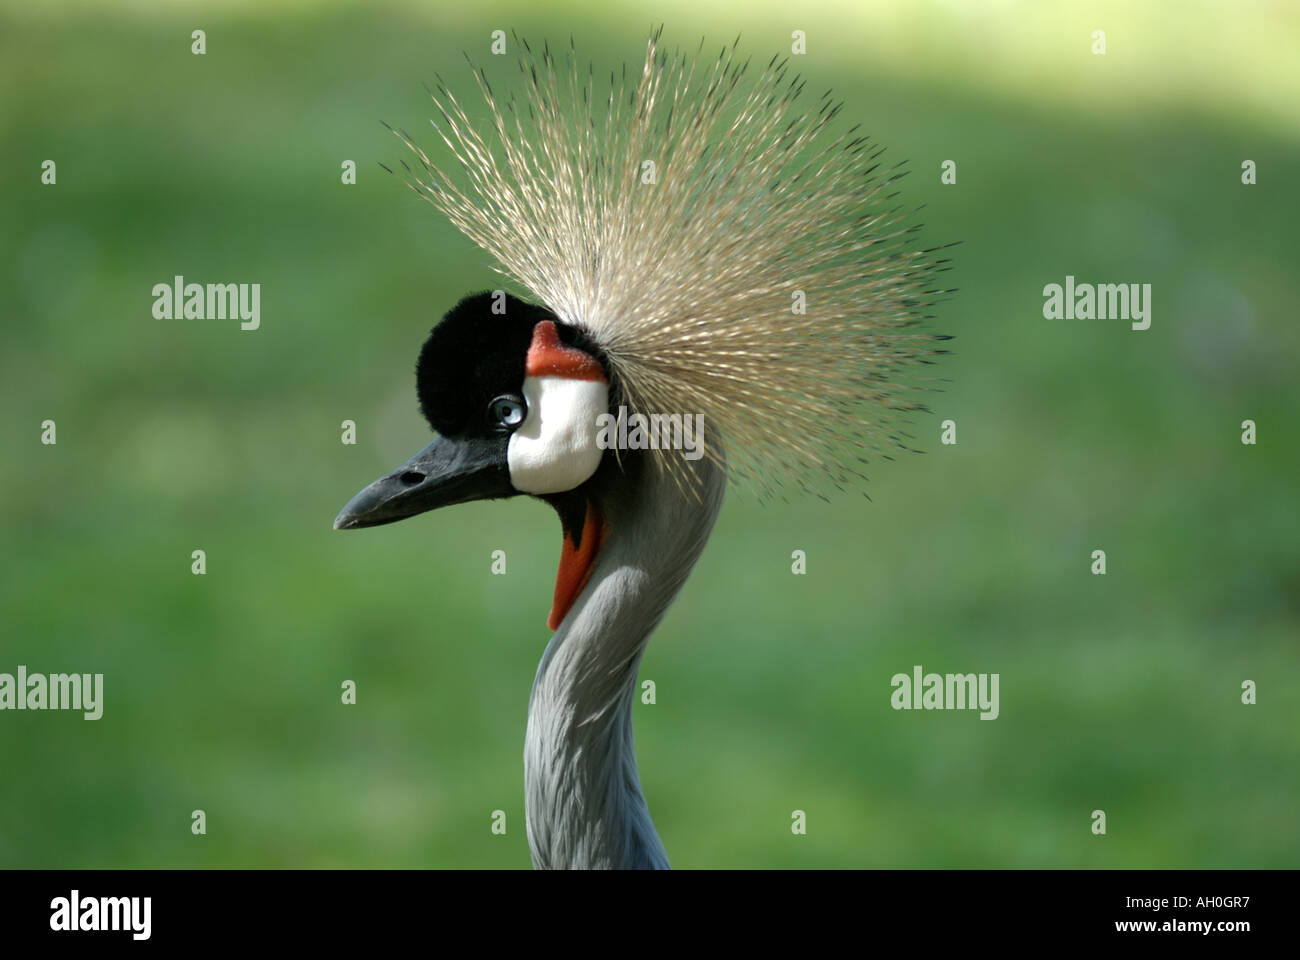 23 Red Spiky Hair Bird Images Stock Photos  Vectors  Shutterstock